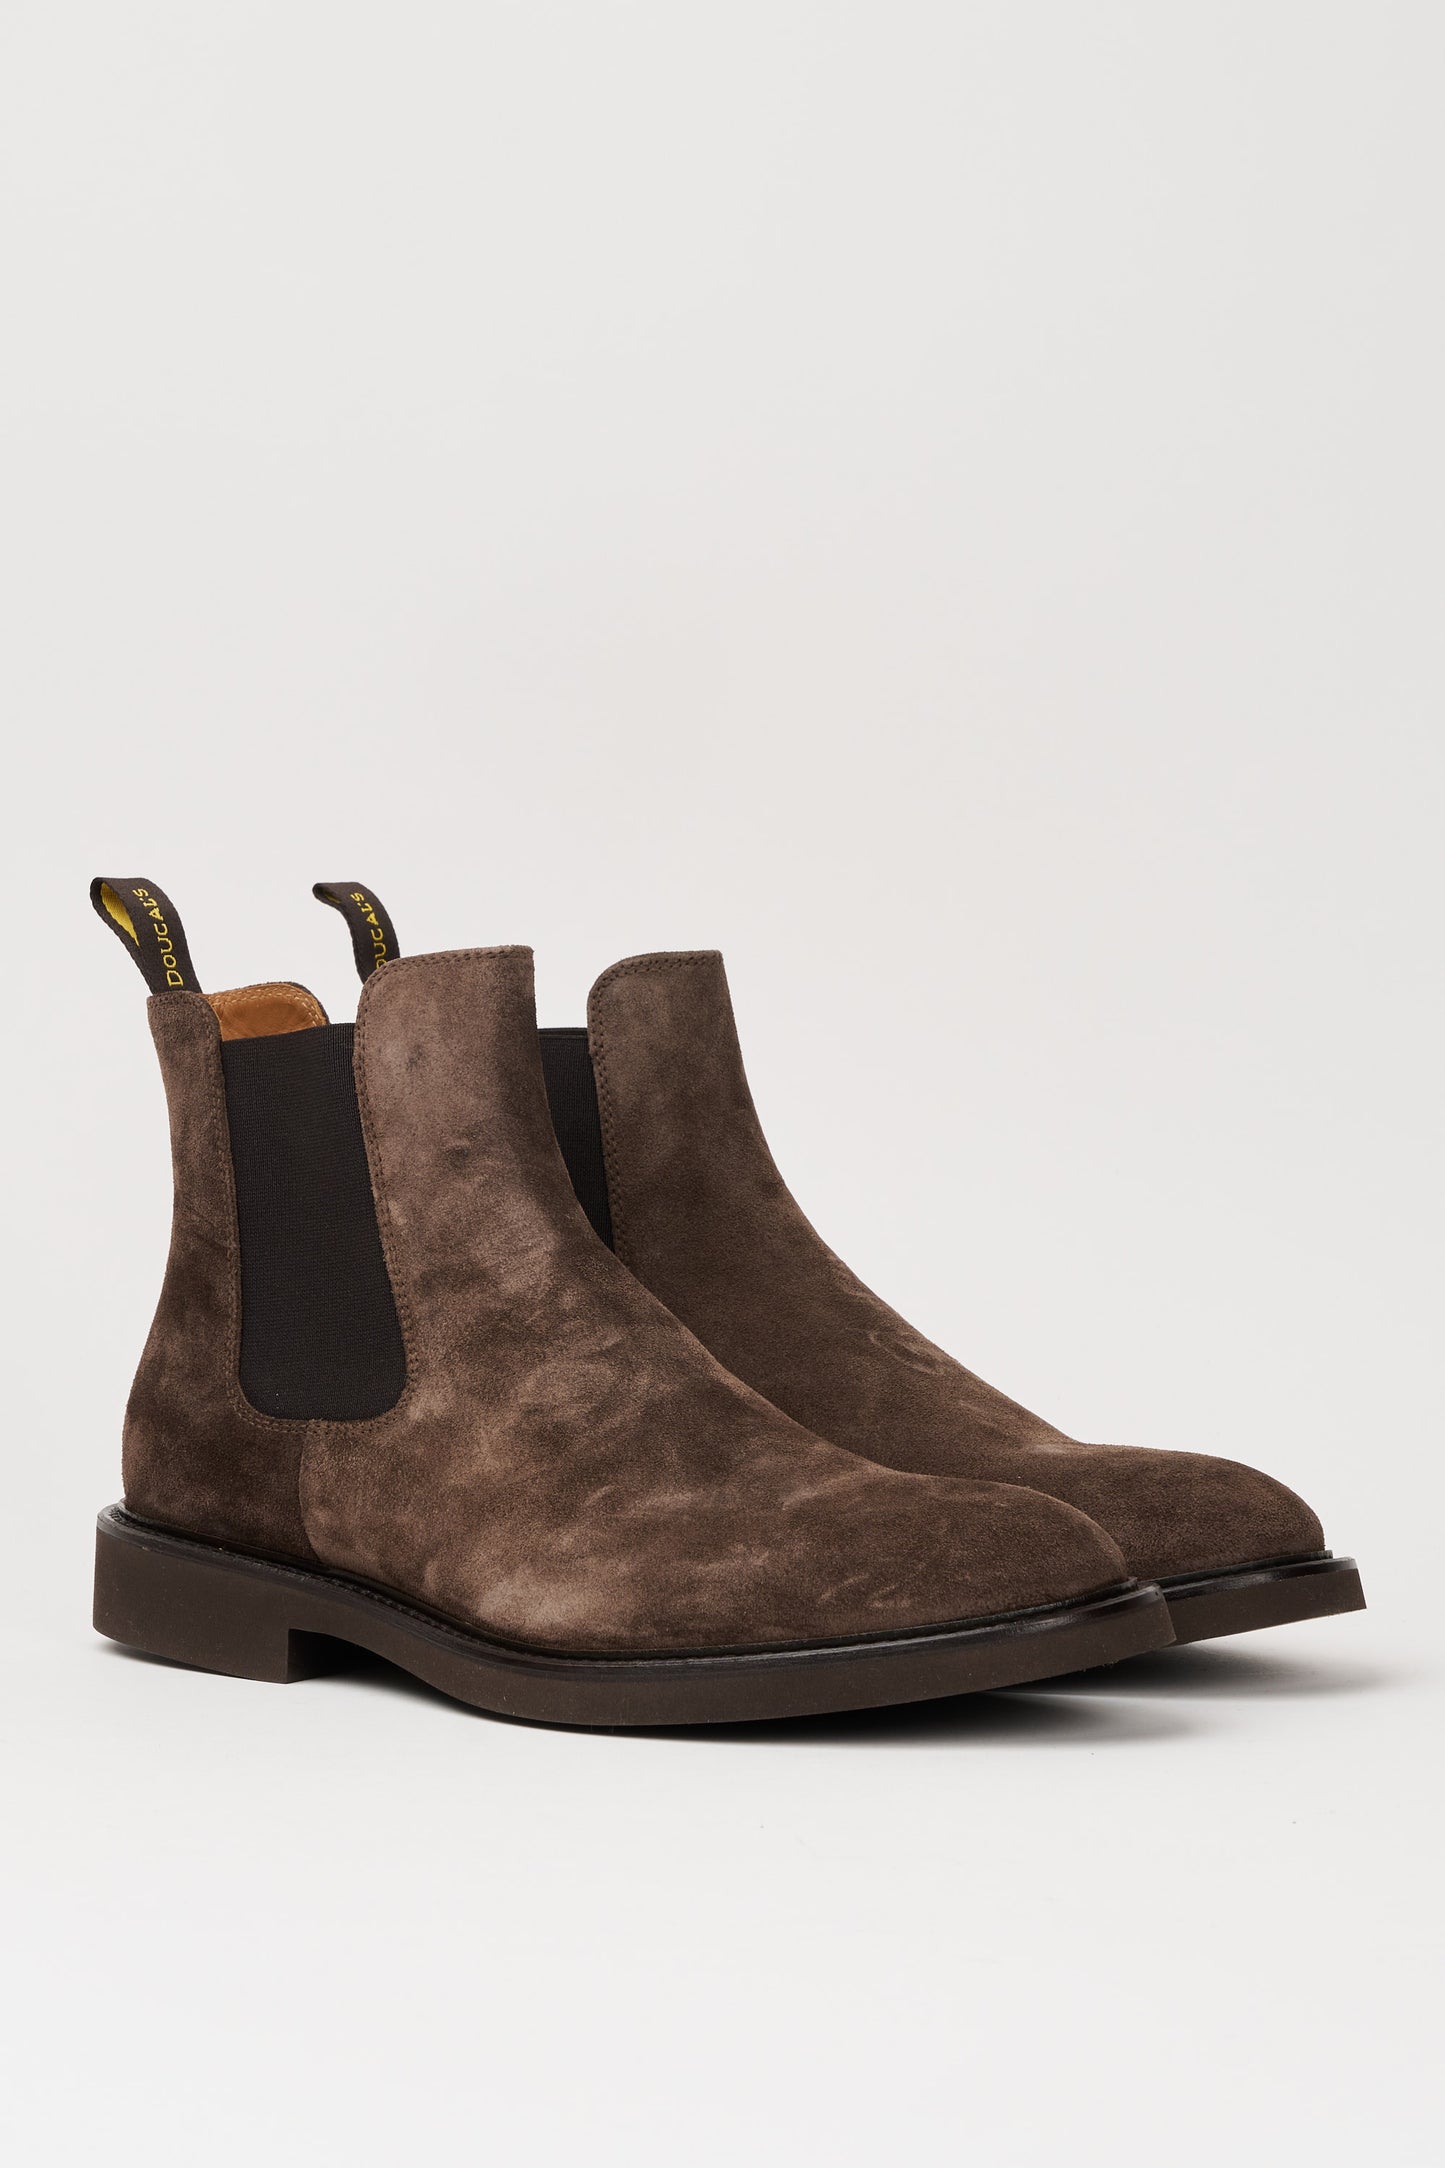  Doucal's Men's Brown Ankle Boot 92220-18334 Marrone Uomo - 9